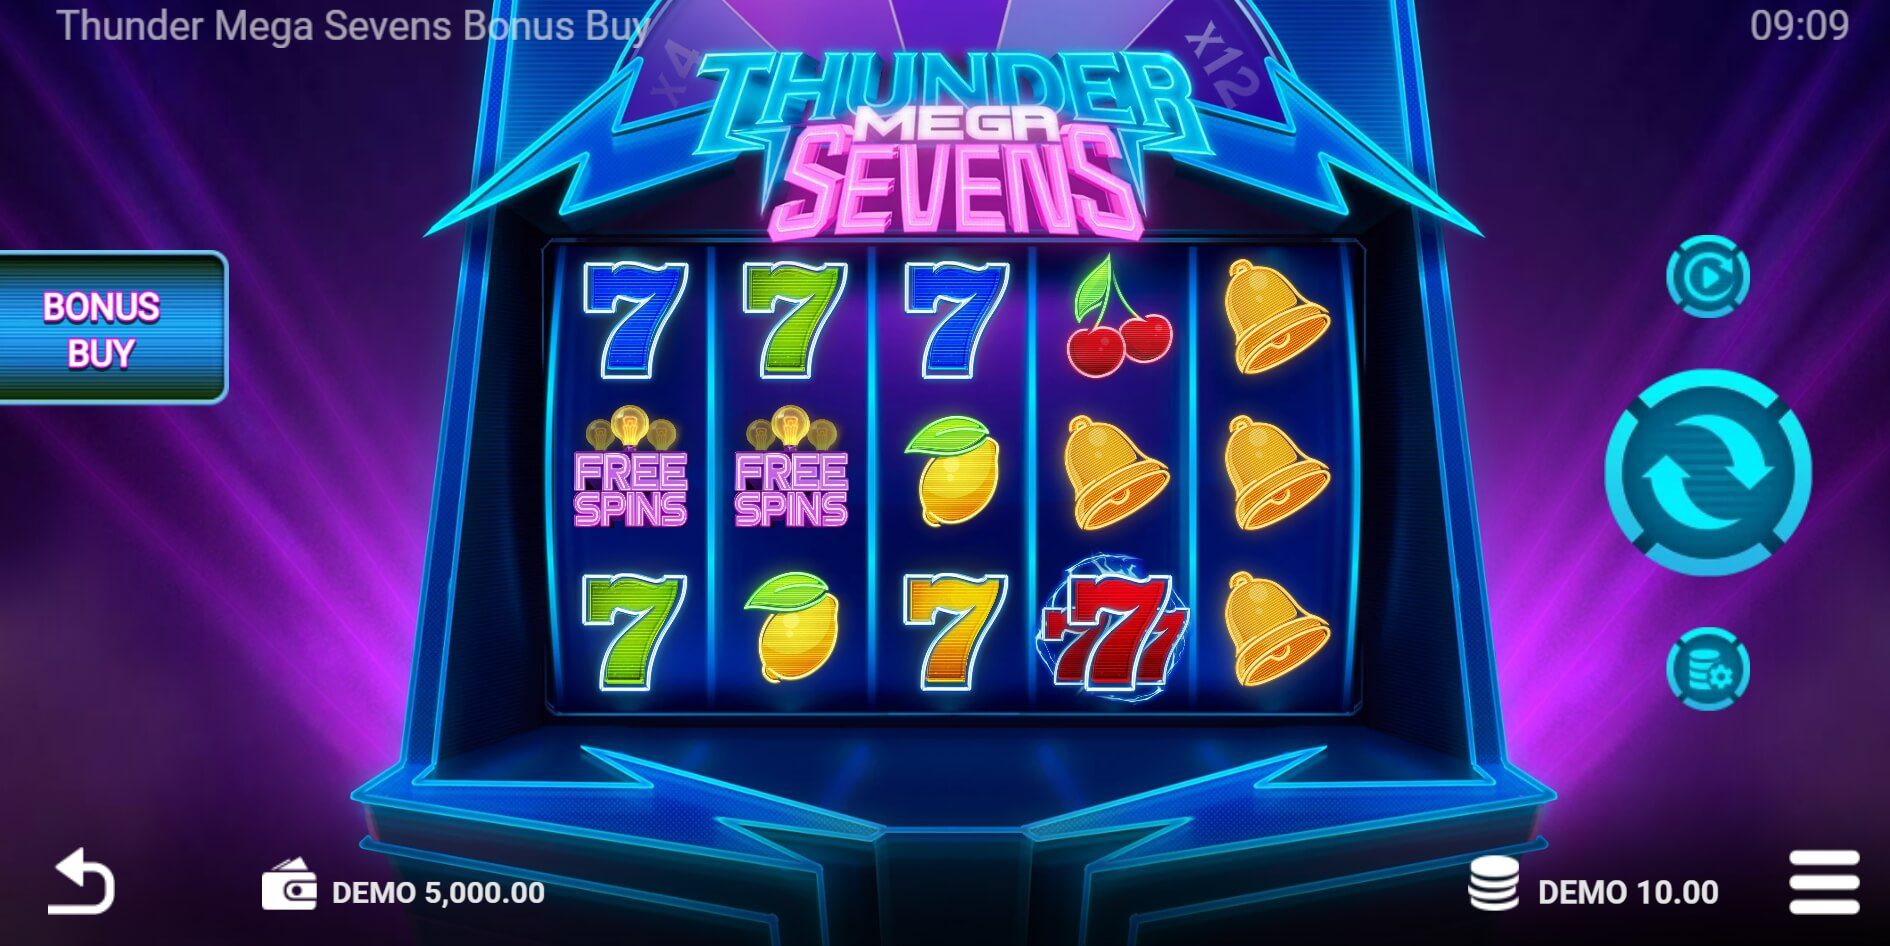 Thunder Mega Sevens Bonus Buy Evo Play ซุปเปอร์สล็อต ใหม่ล่าสุด